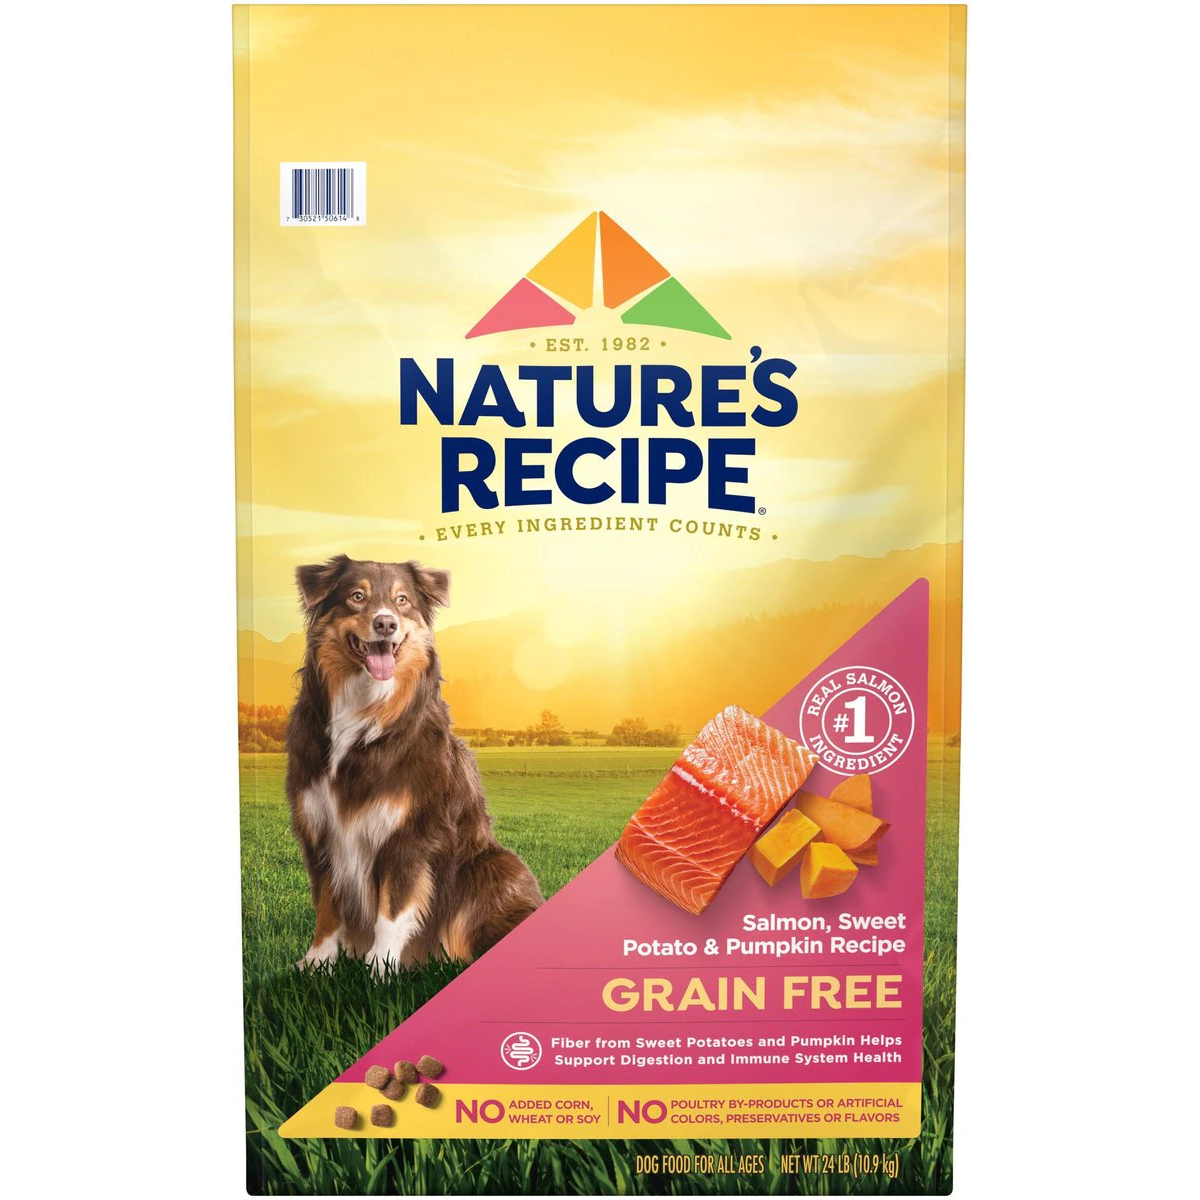 Nature’s Recipe Grain-Free Salmon & Potato Dog Food